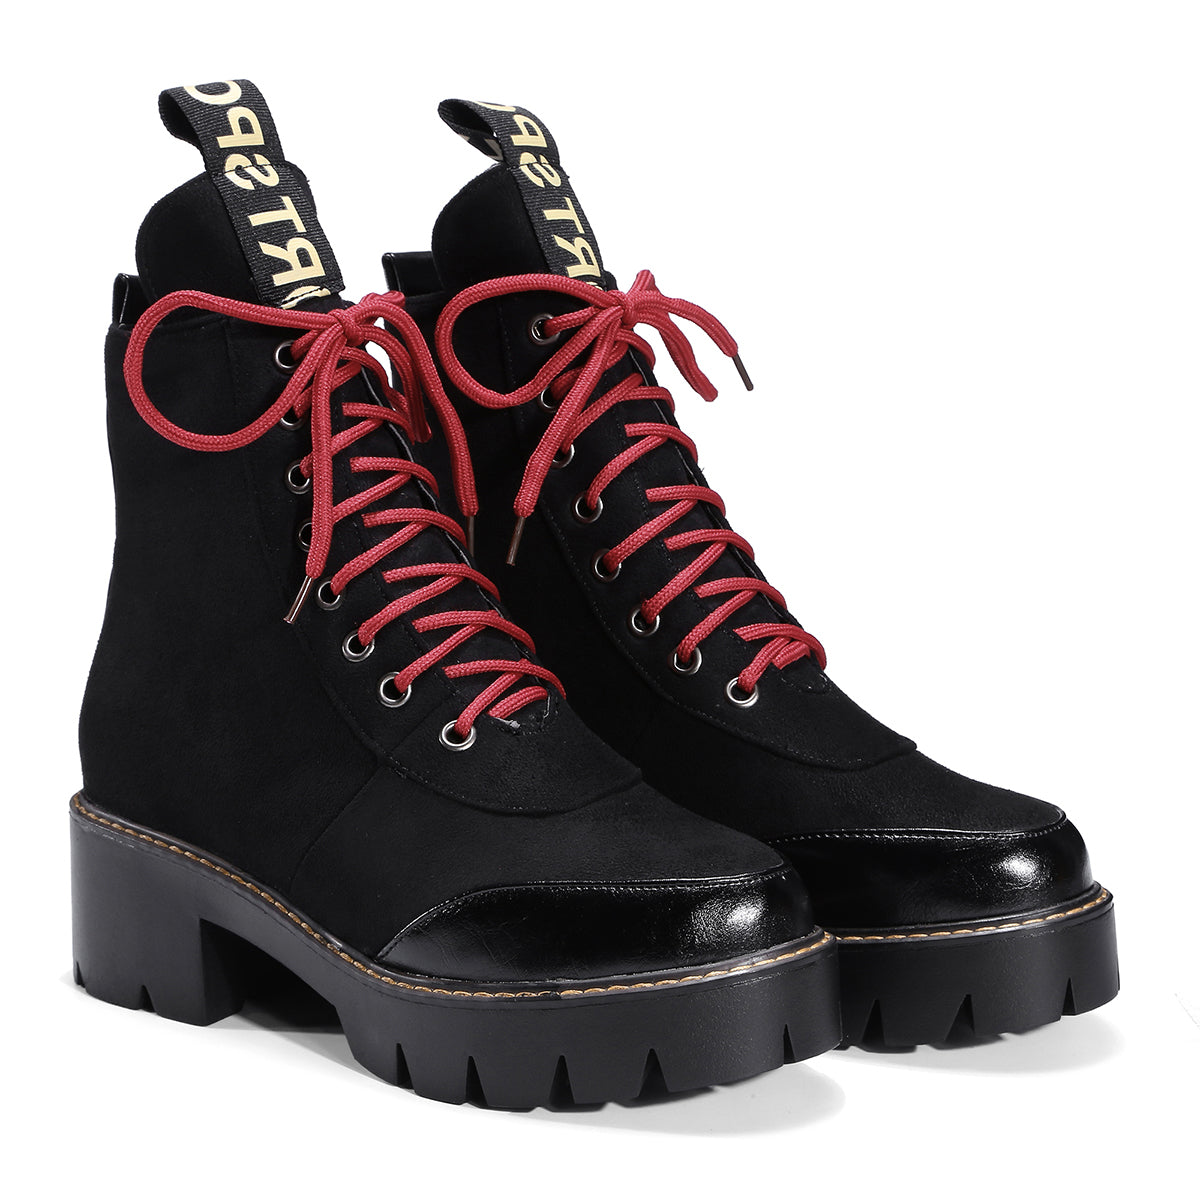 Bigsizeheels Round toe color strap Martin boots - Black freeshipping - bigsizeheel®-size5-size15 -All Plus Sizes Available!